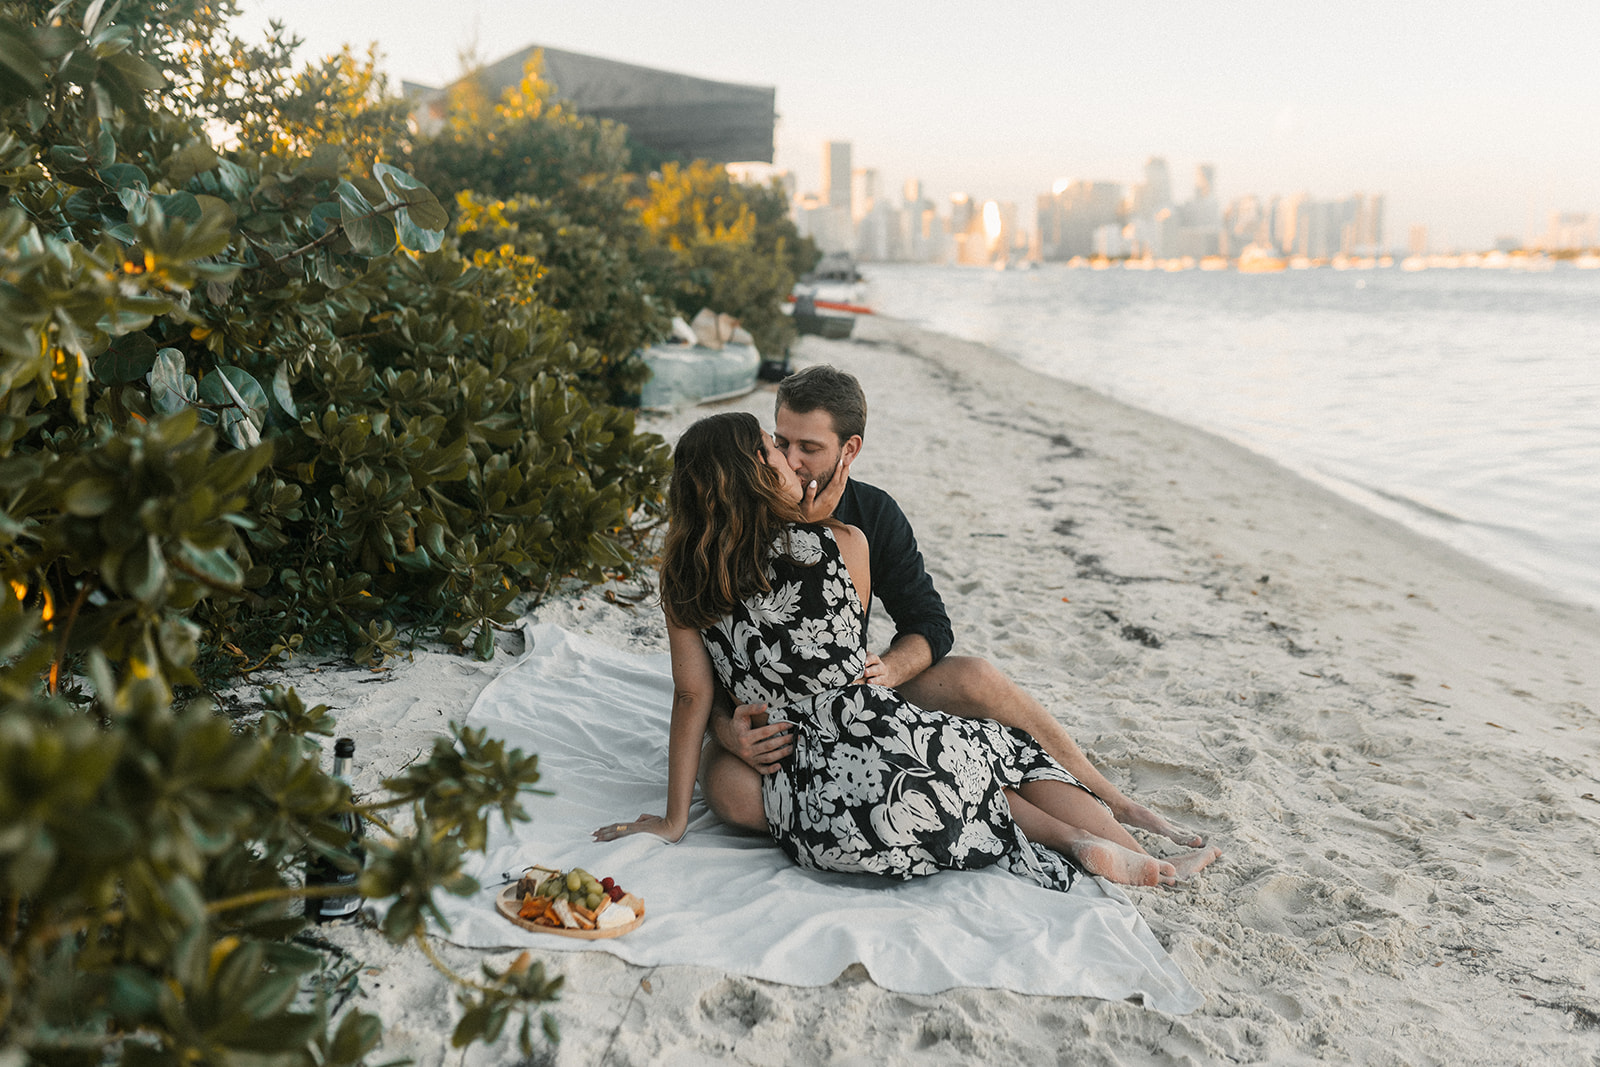 A couple having a romantic picnic at the beach in Miami Beach.